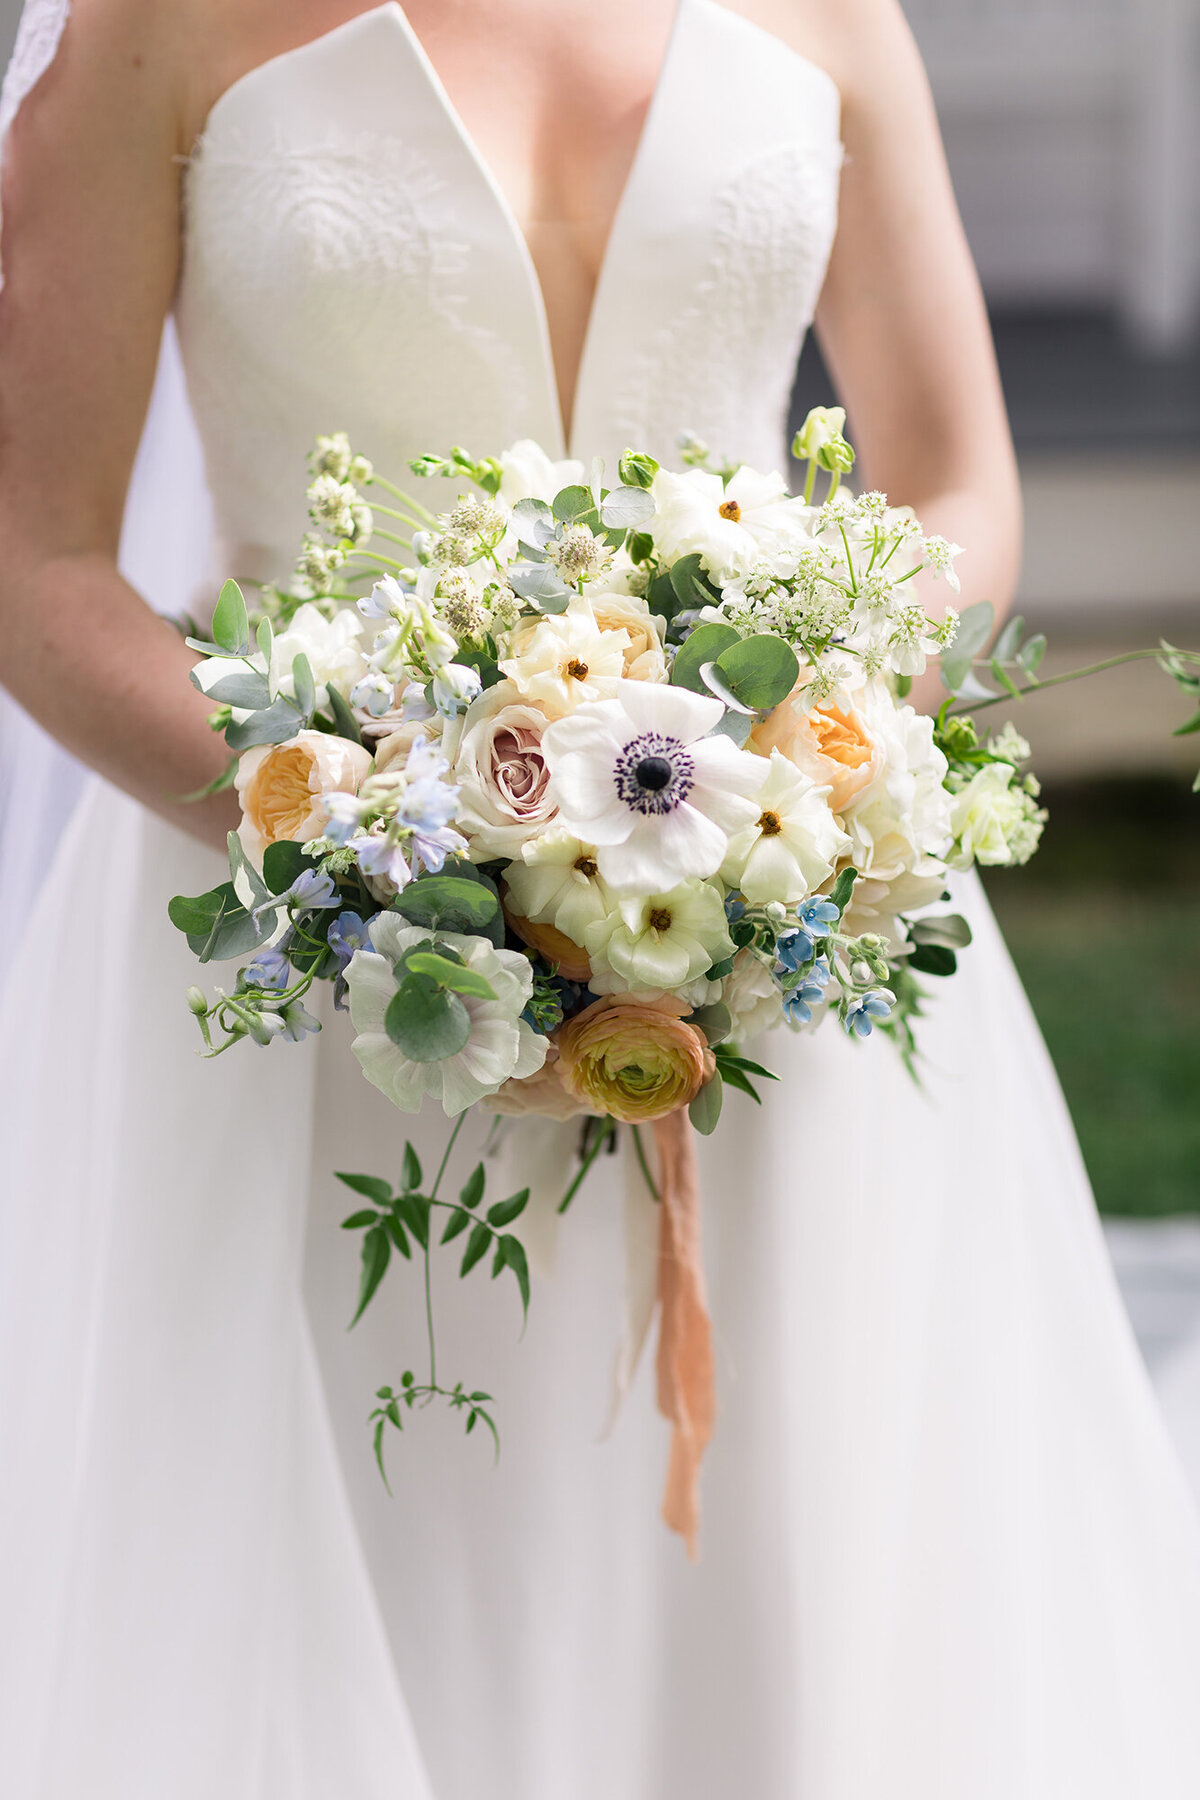 smith-farm-garden-east-haddam-connecticut-late-summer-wedding-florals-flowers-tableware-rentals-ceremony-arch-bridal-bouquet-petals-&-plates-6